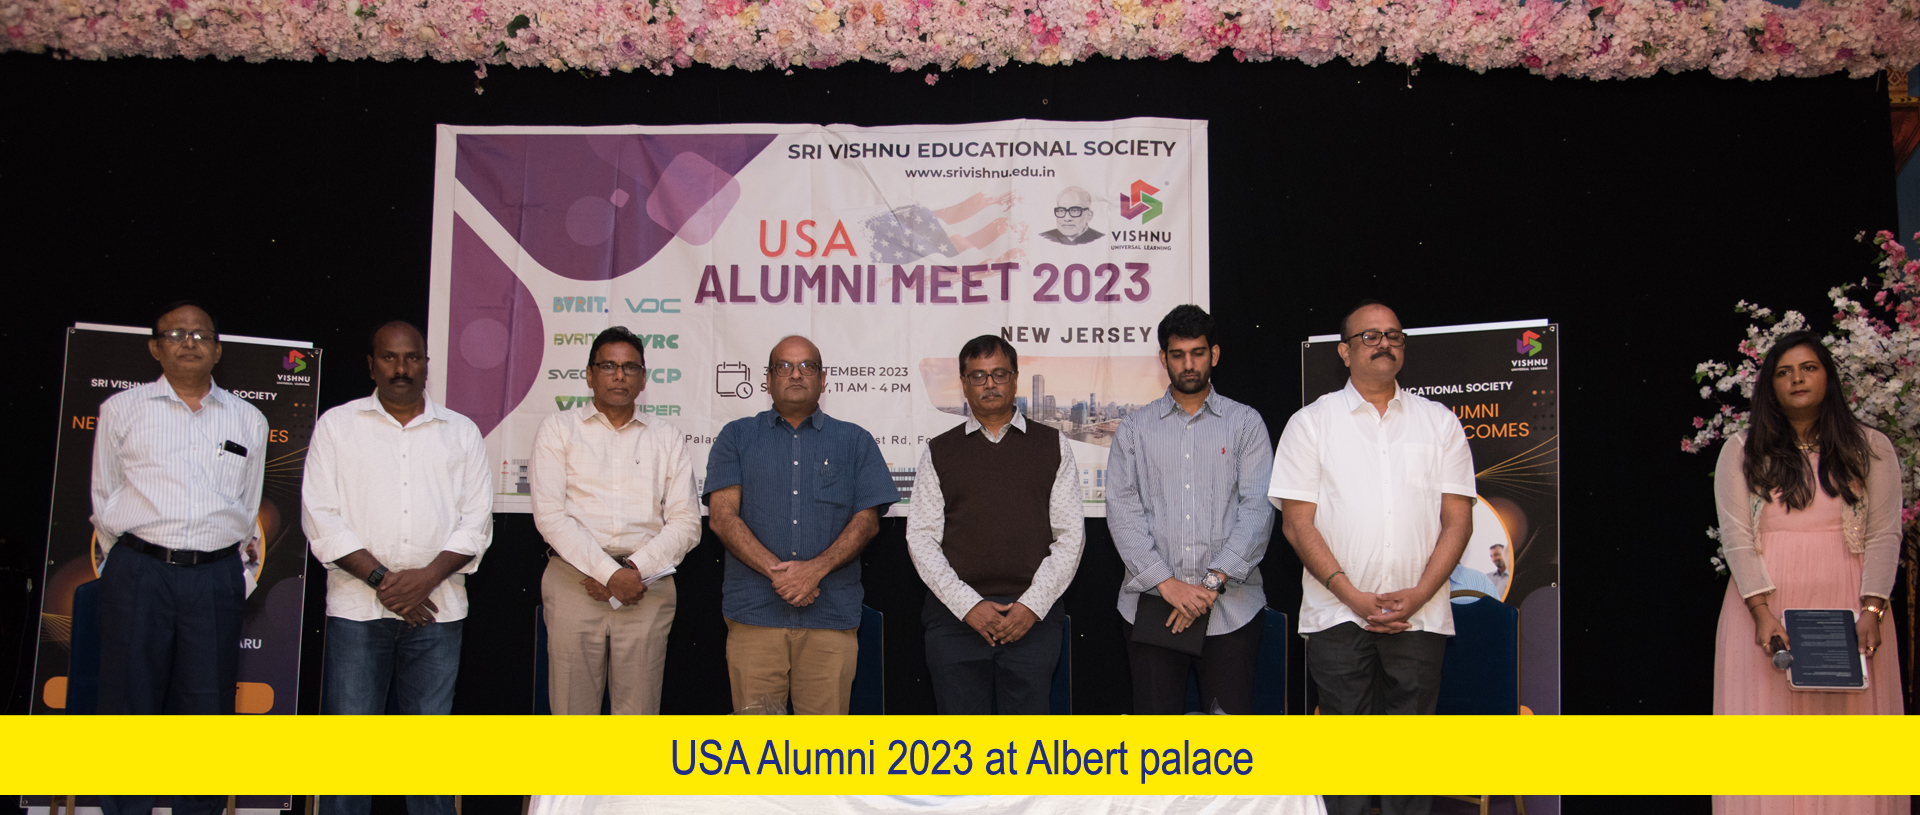 USA Alumni 2023 at Albert palace